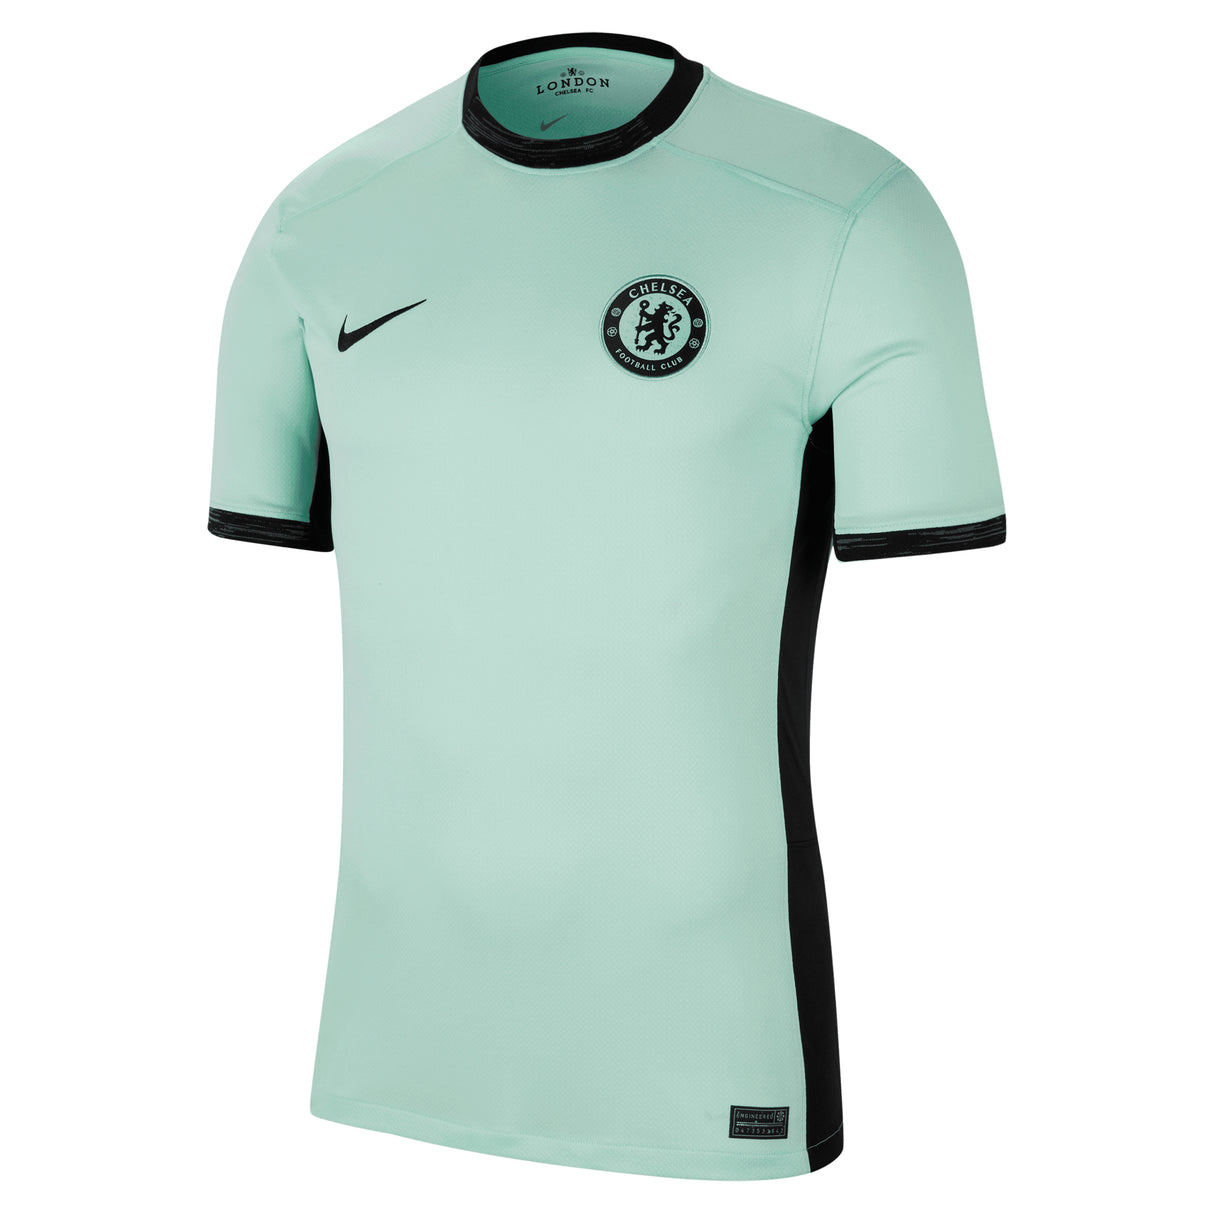 Chelsea Third Stadium Shirt 2023-24 with Macario 9 printing - Kit Captain